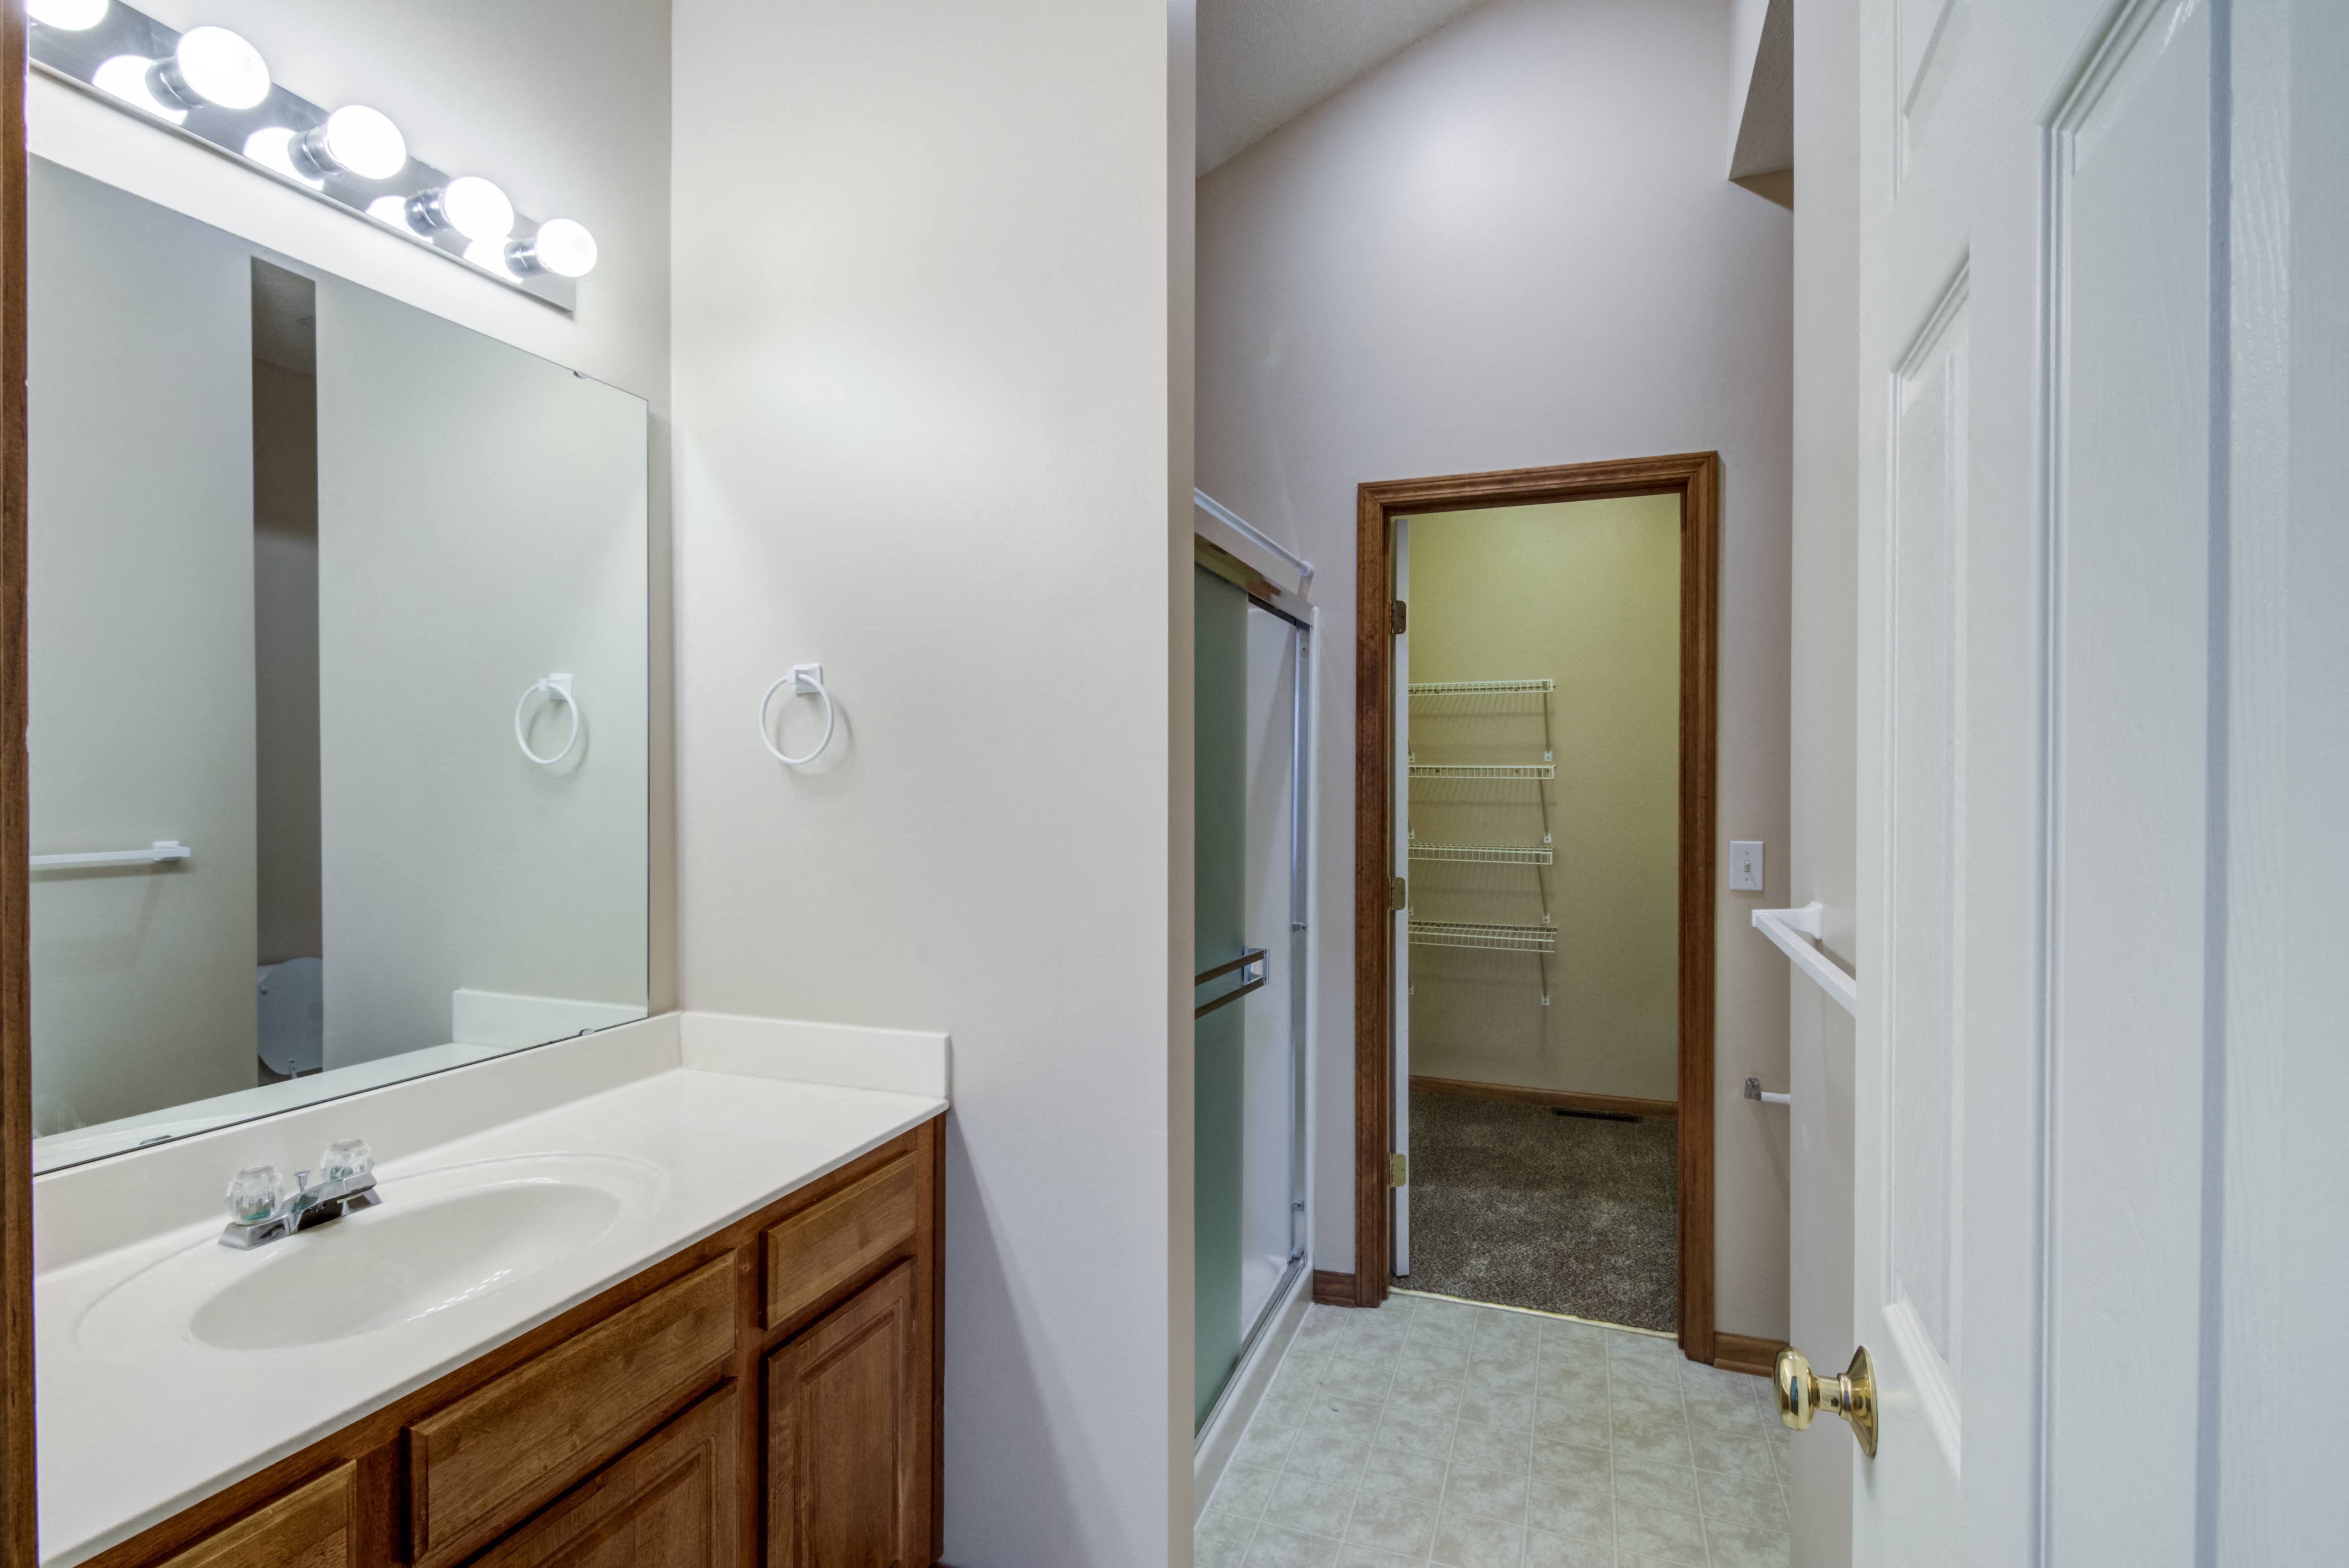 full carpeted bathroom. shower with sliding glass panels